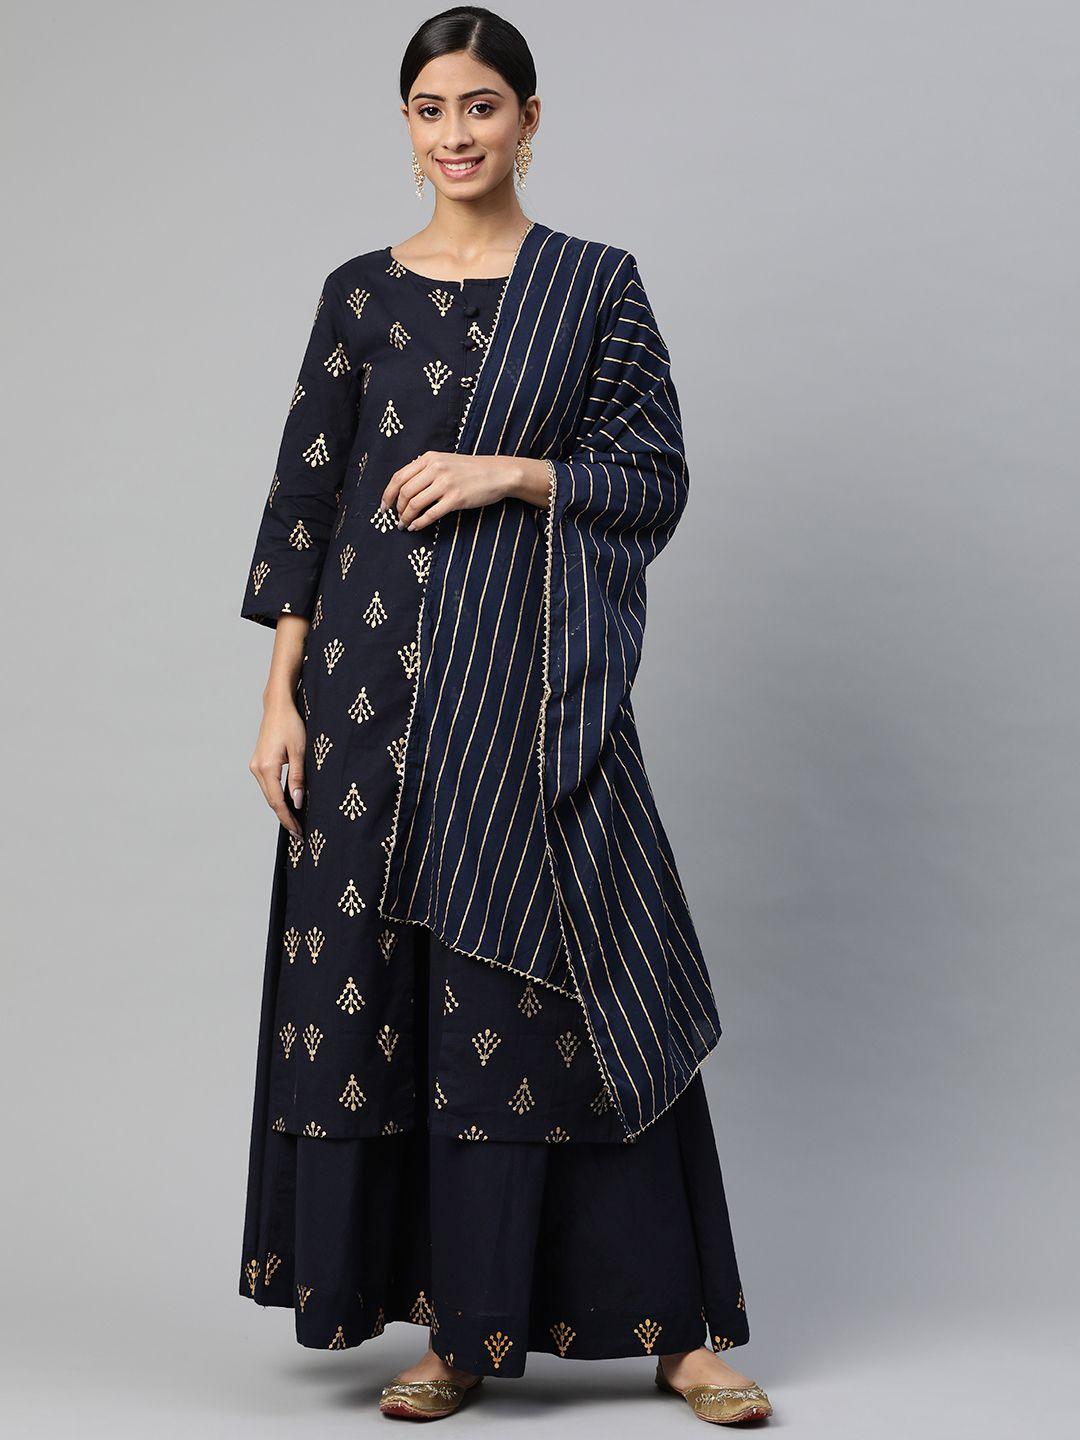 svarchi women navy blue pure cotton ethnic motifs printed kurta with skirt & with dupatta